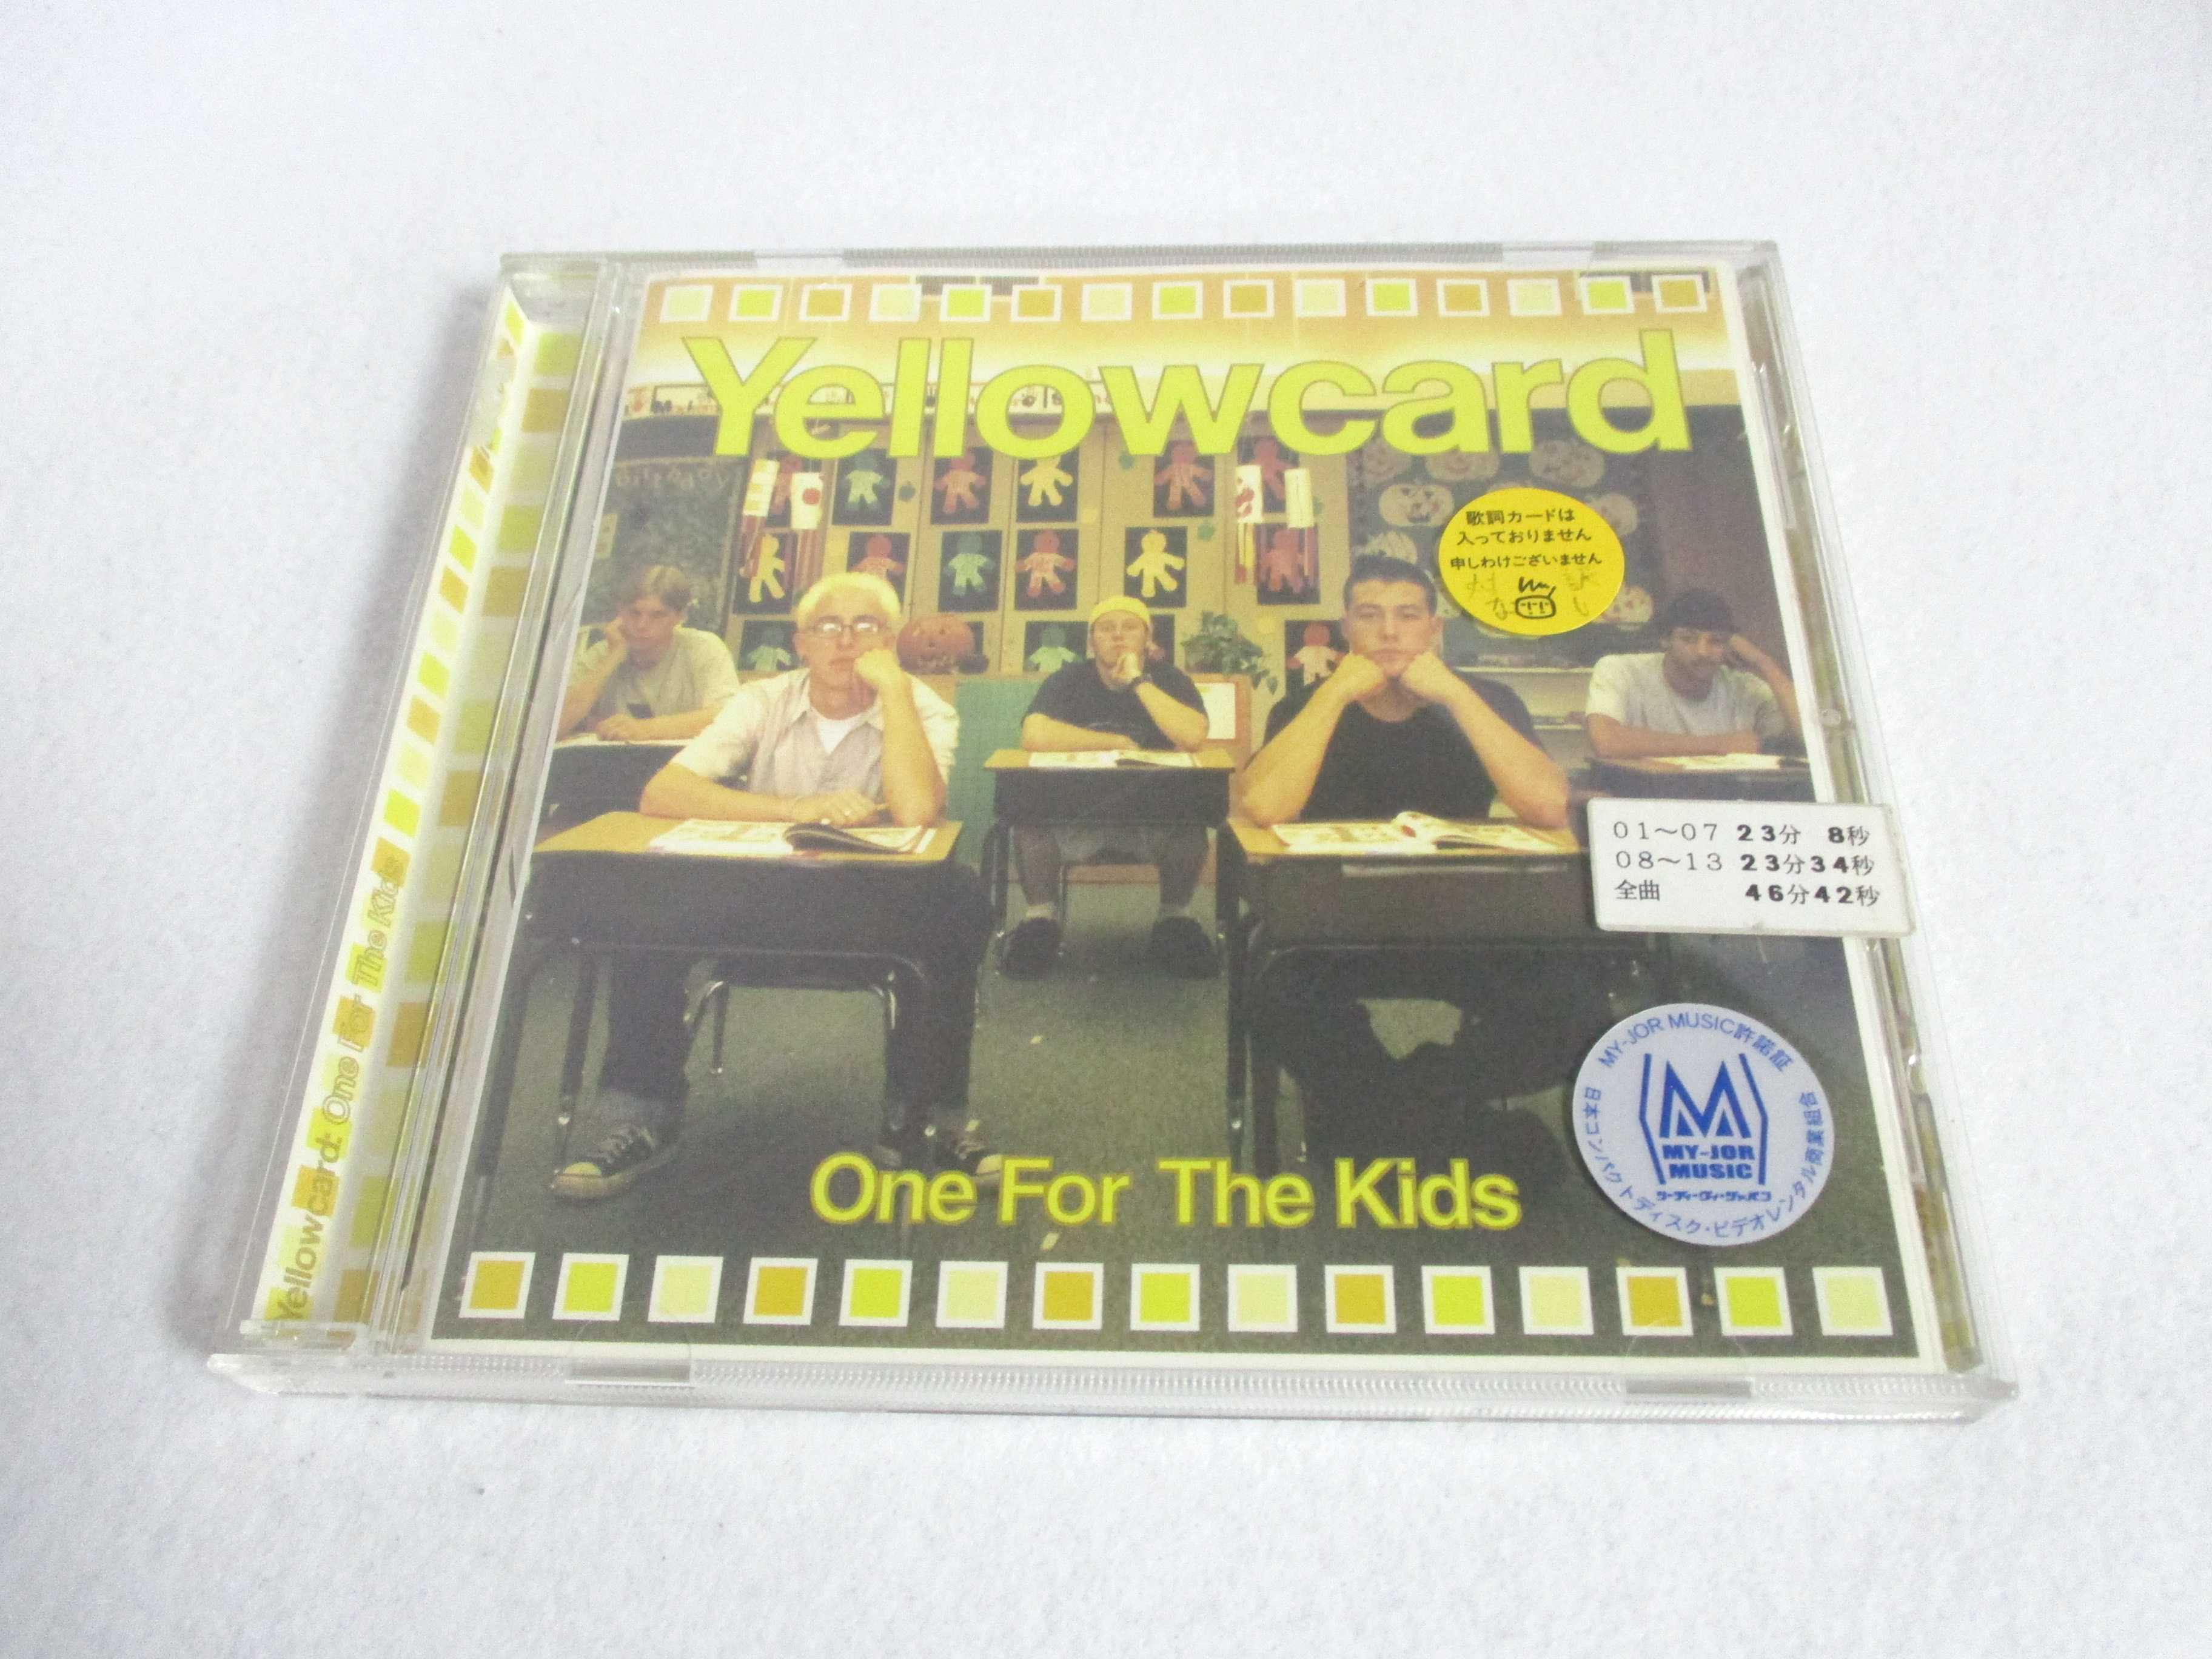 AC06296 yÁz yCDz One For The Kids/Yellowcard